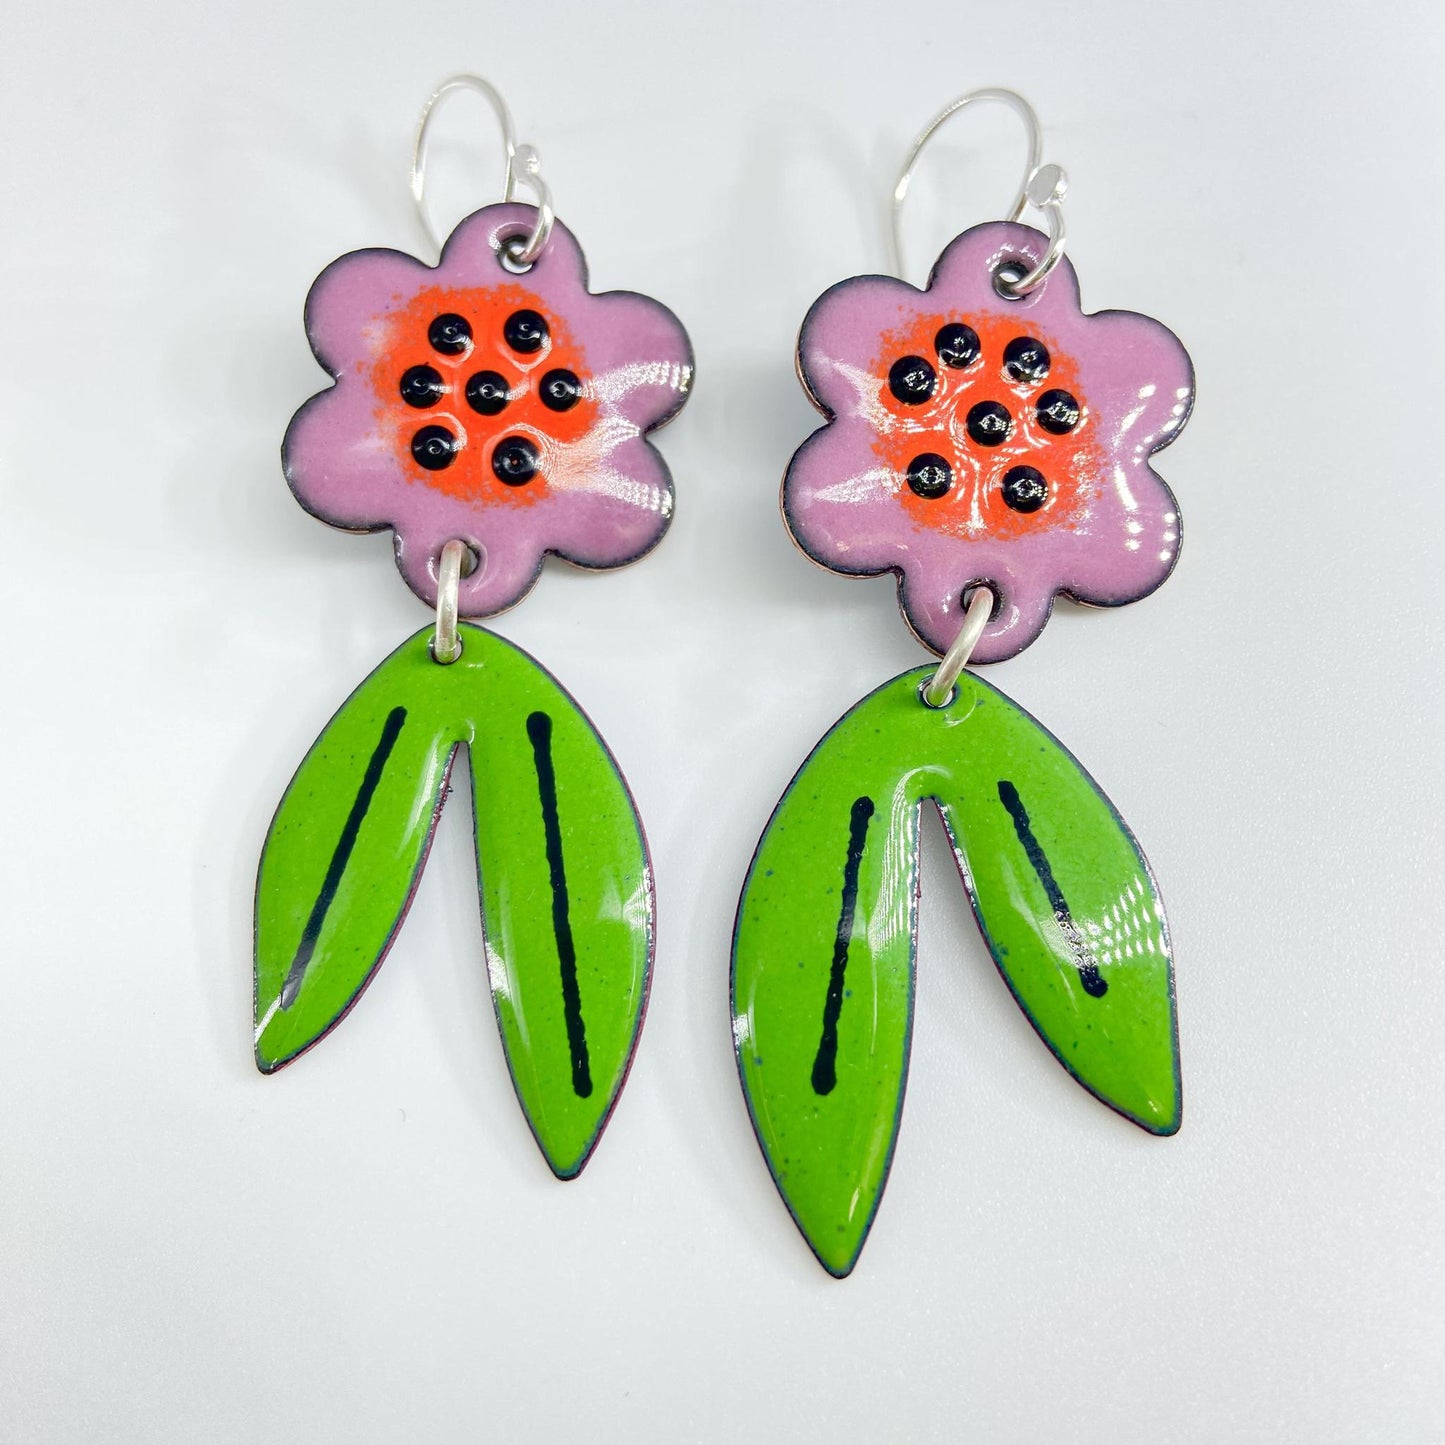 Earrings - Pink and Orange Wildflowers #1 - Enamel on Copper